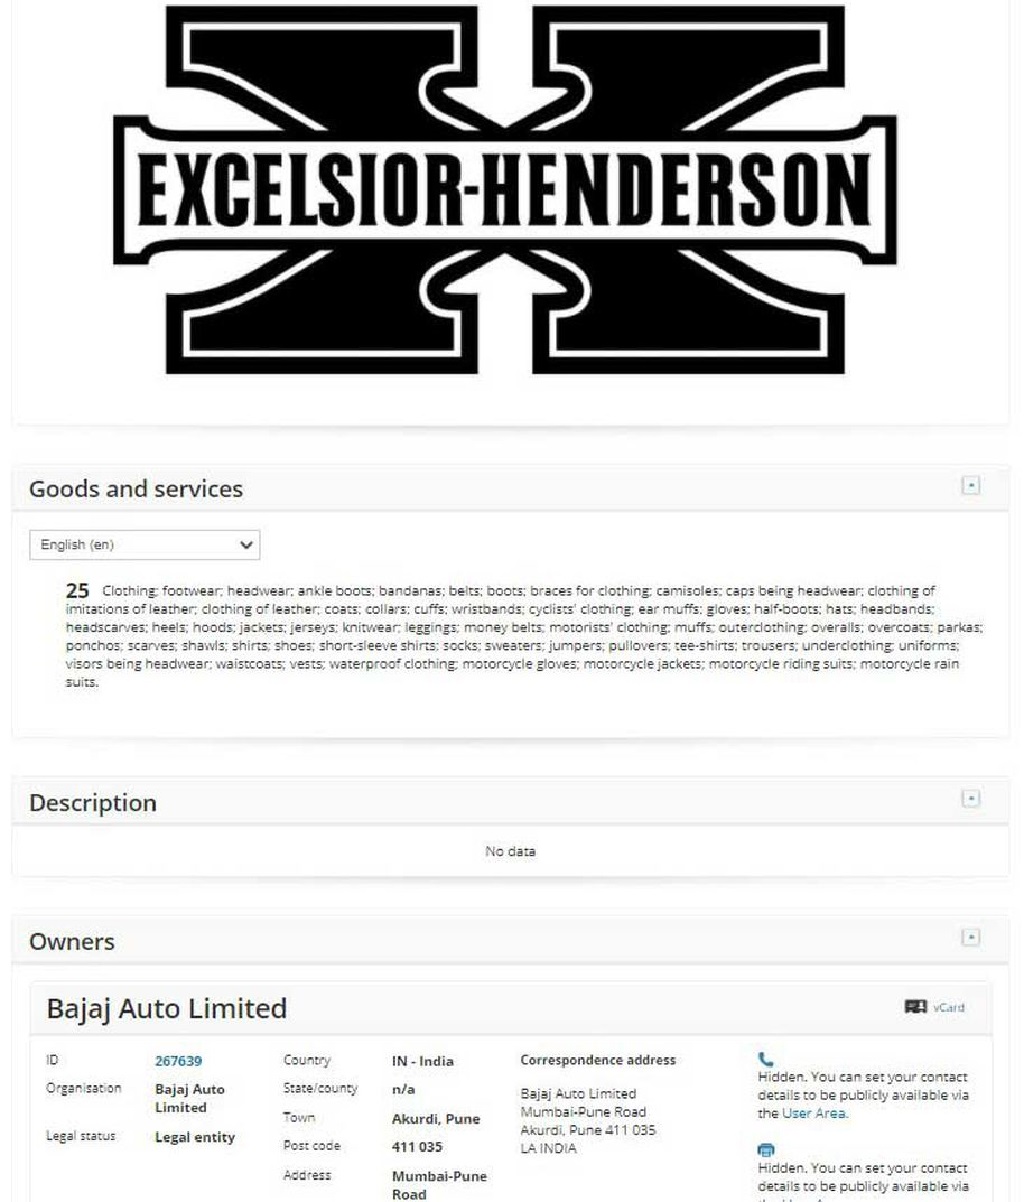 Excelsior-Henderson Revival